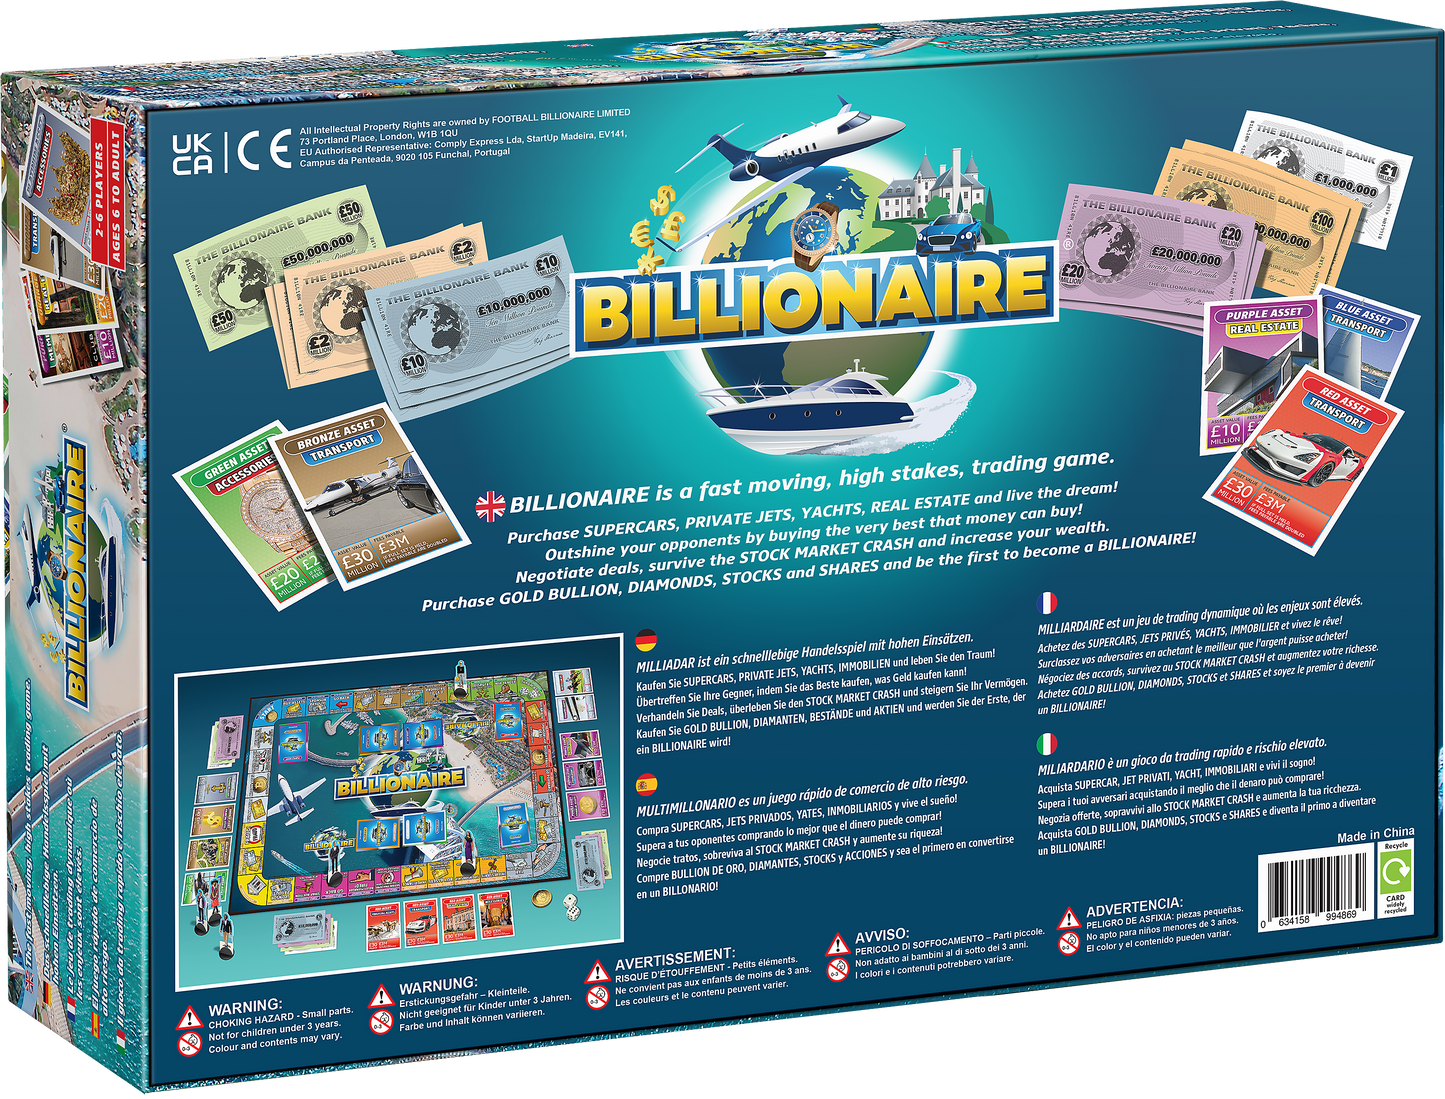 Billionaire Board Game - PRE ORDER FOR APRIL 3RD LAUNCH